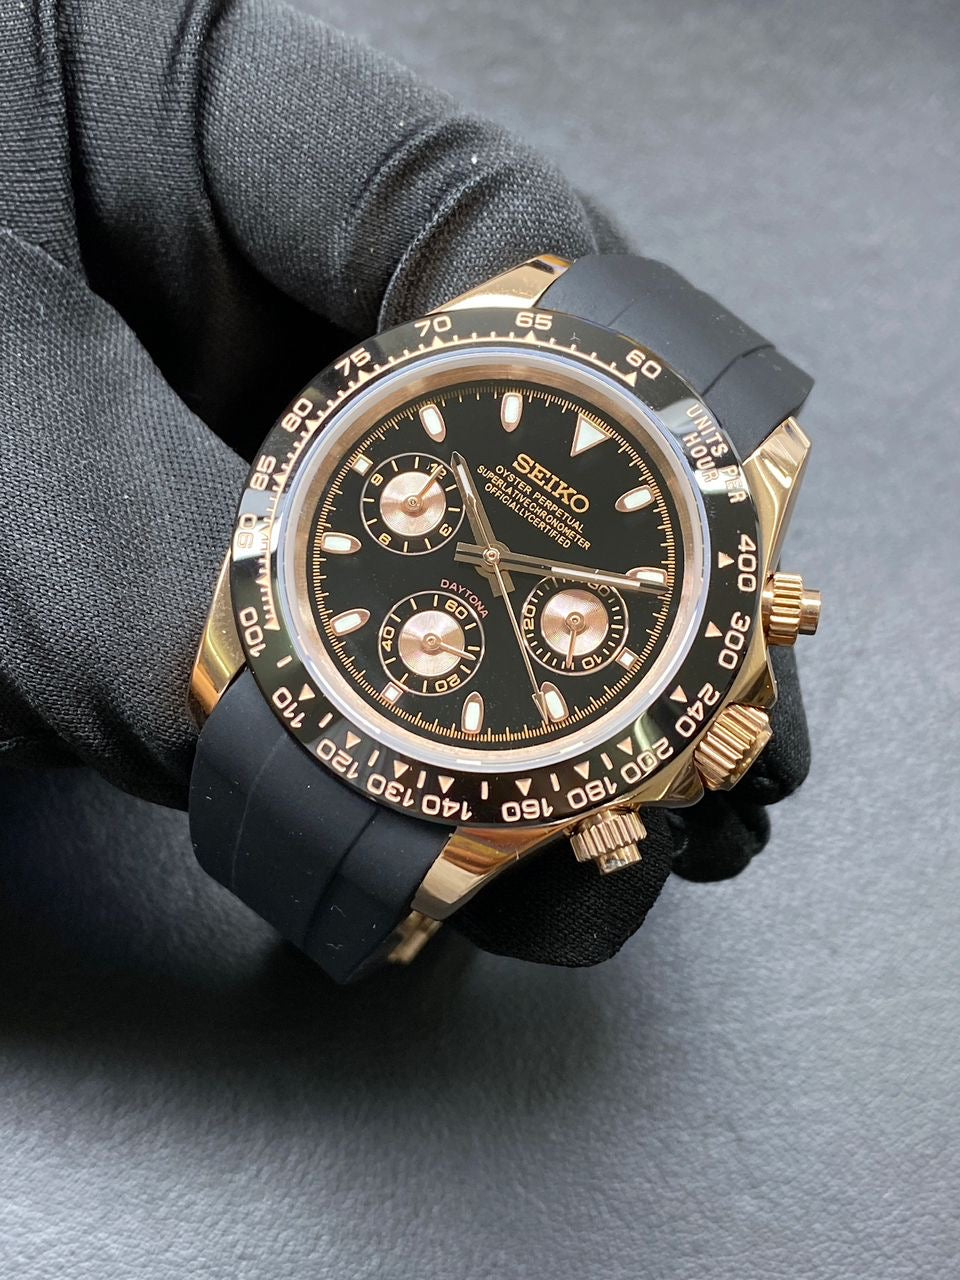 Seiko mod- rosegold Daytona with rubber strap mega-quartz VK63 movement watch